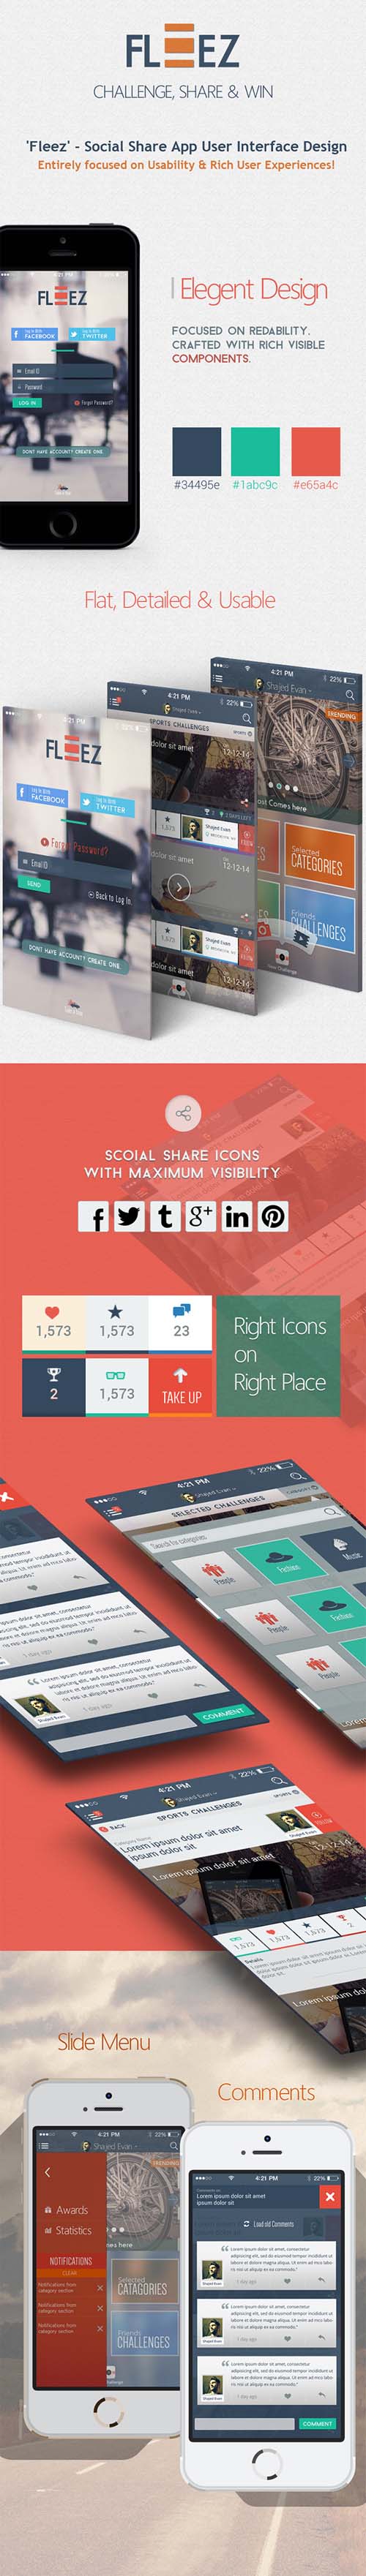 Fleez - Social Share App UI UX Design